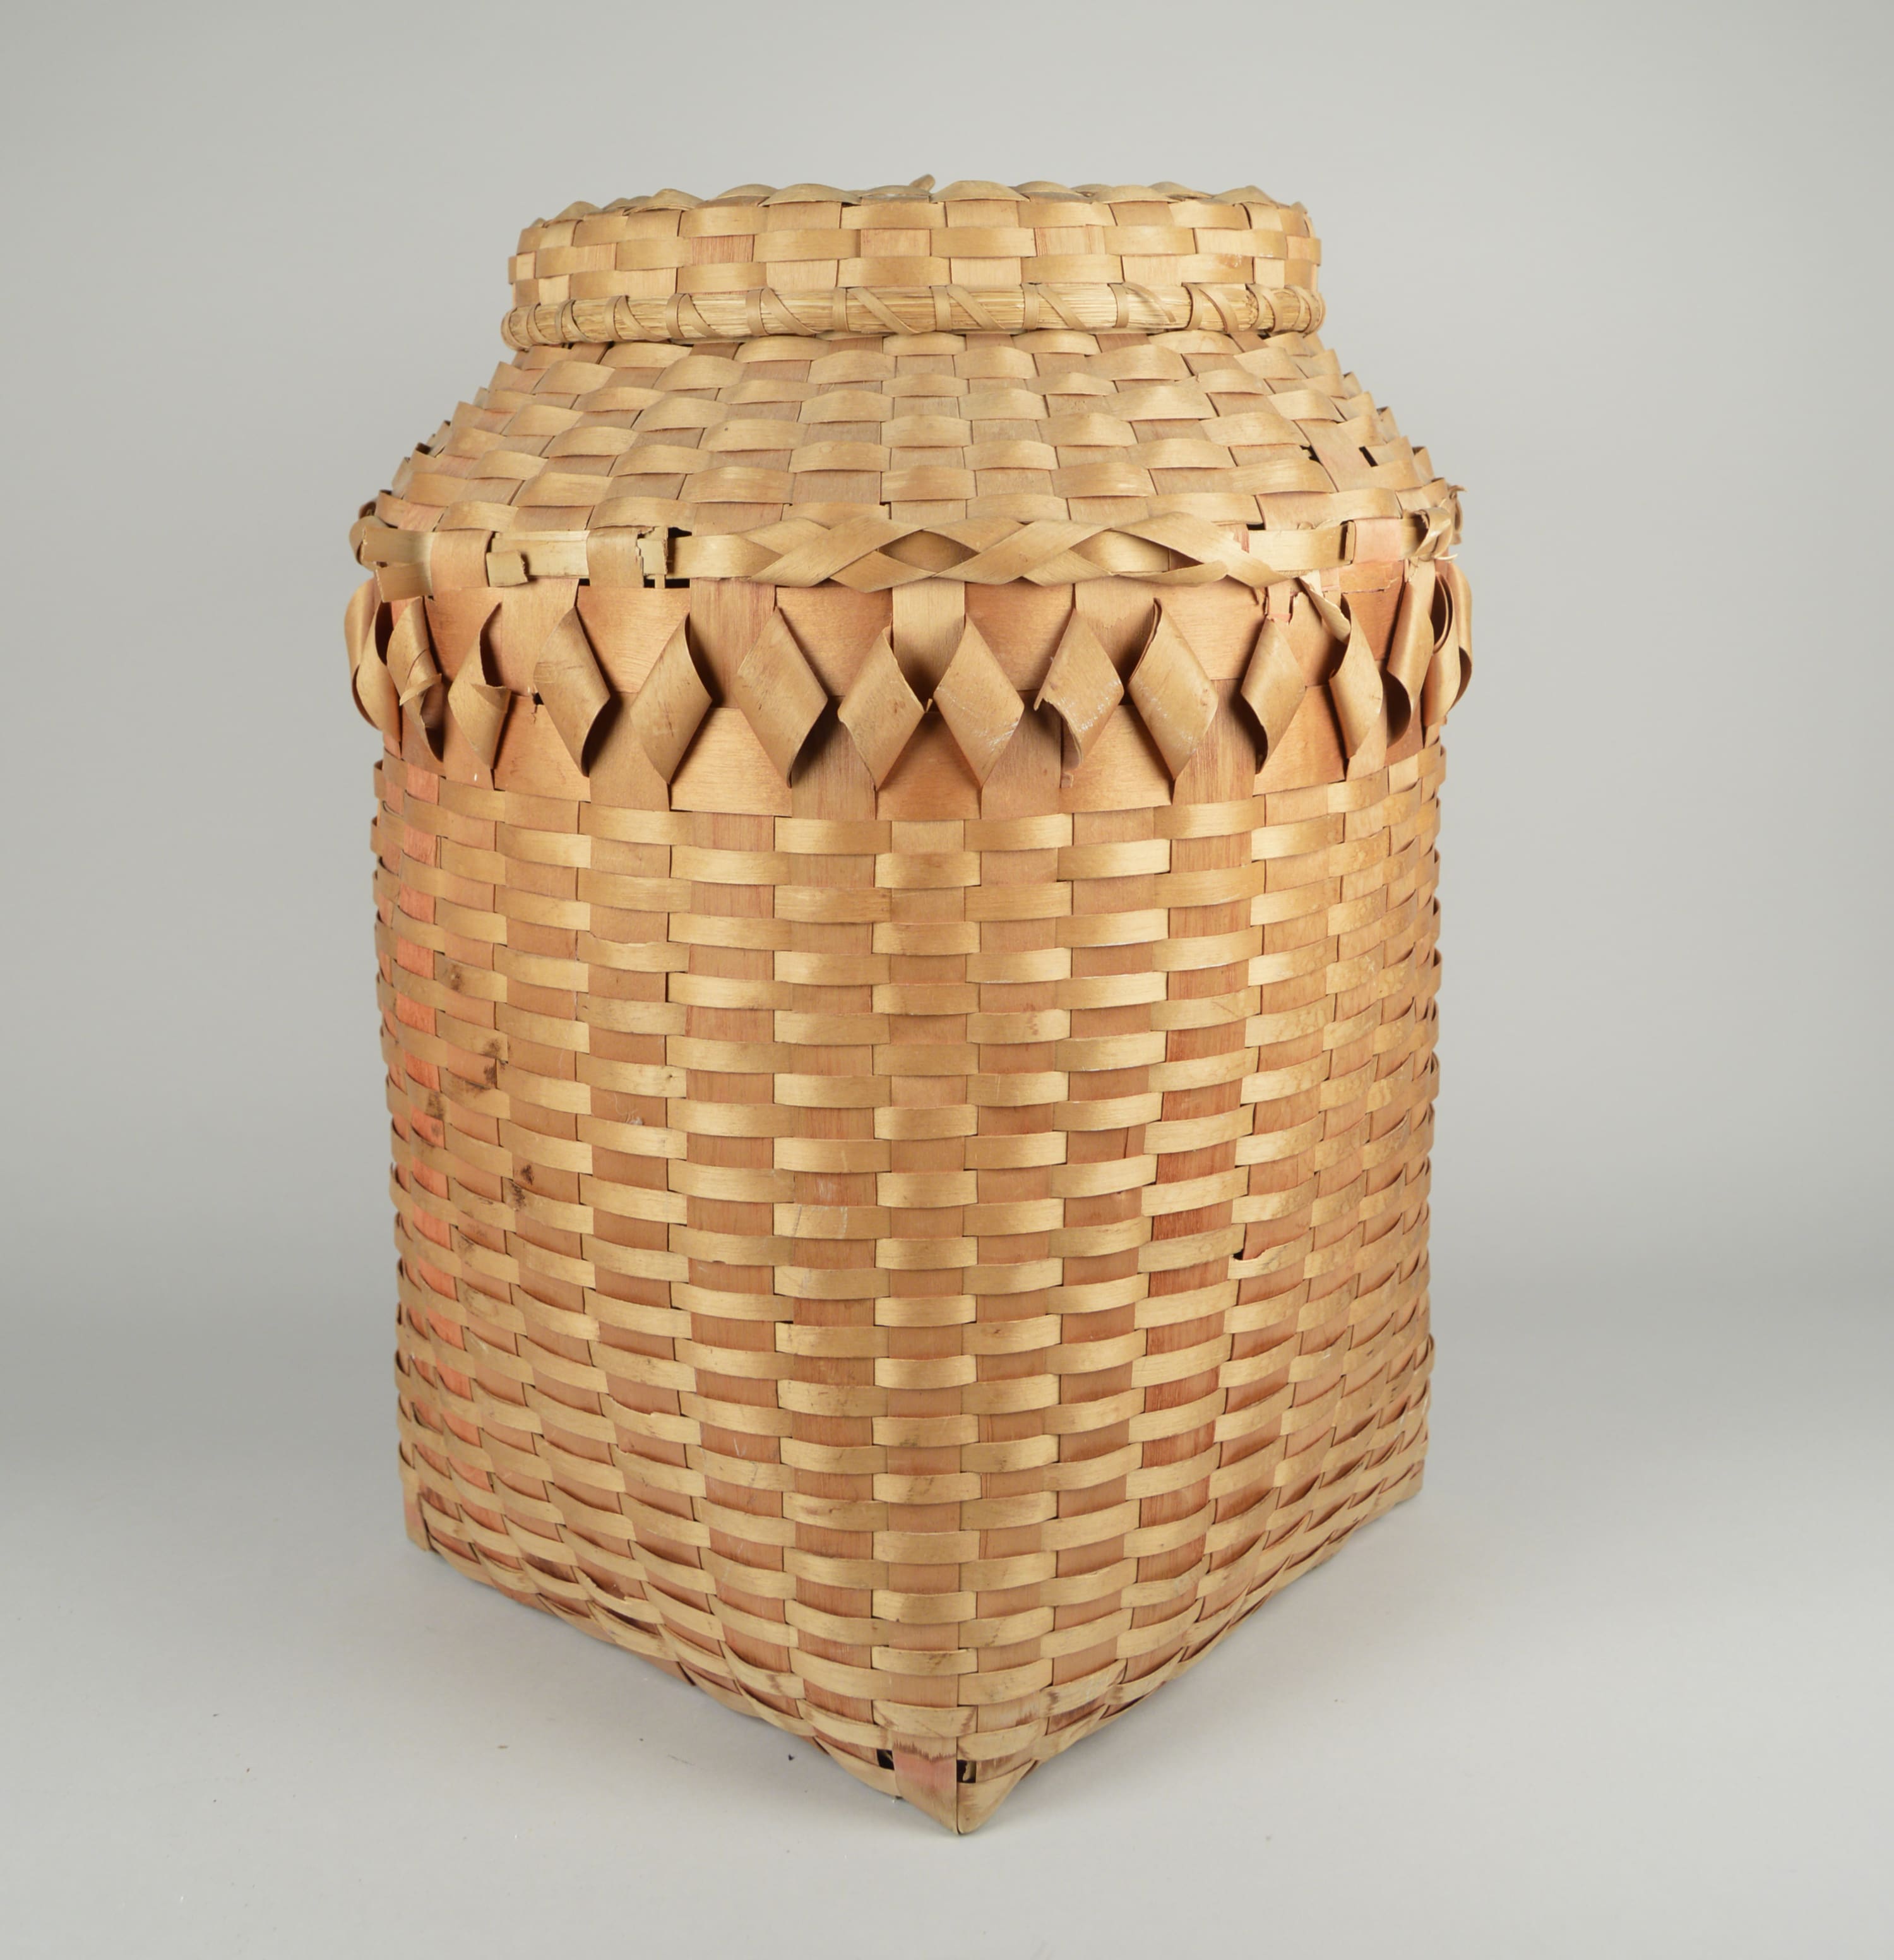 Basket - Large Ash with Lid